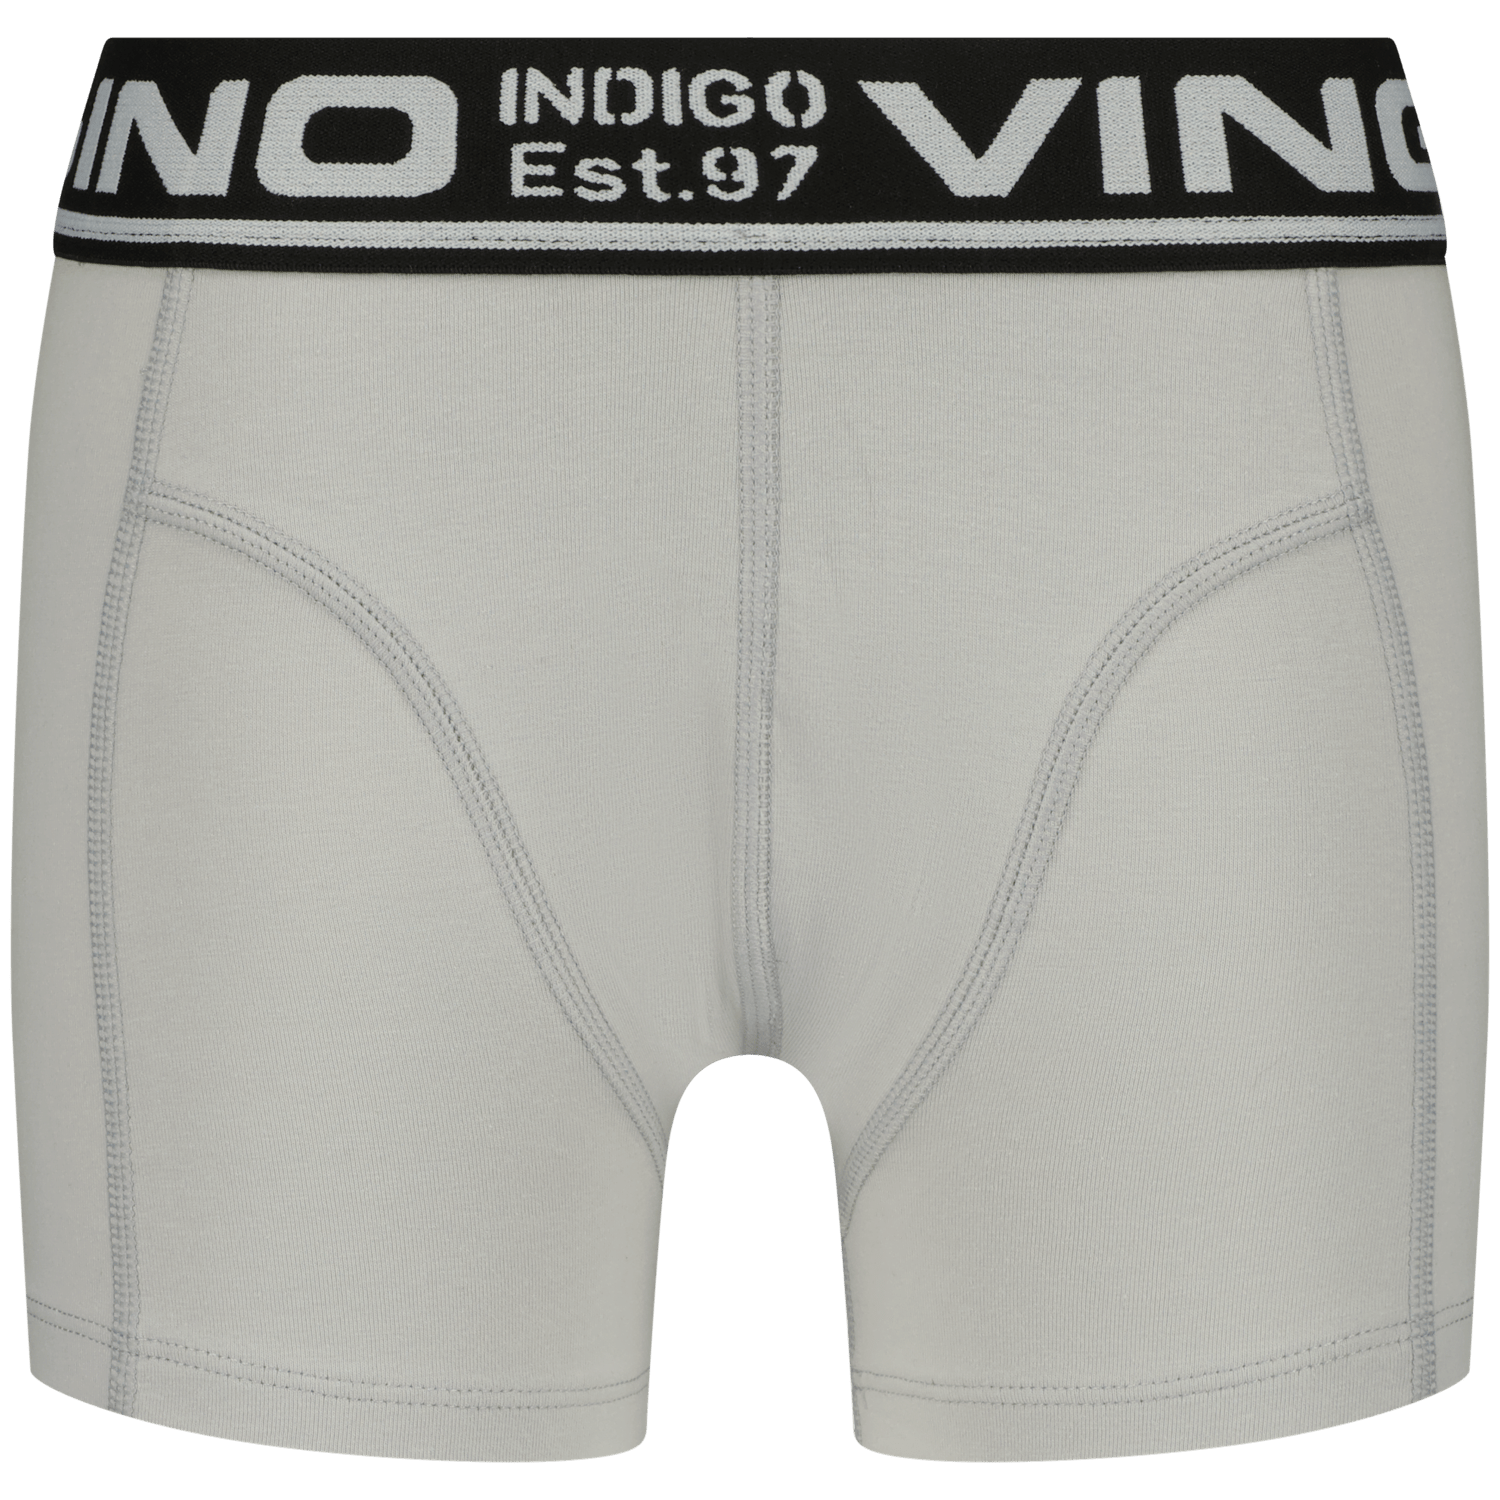 VINGINO Boxershort B-so24 check 3-pack